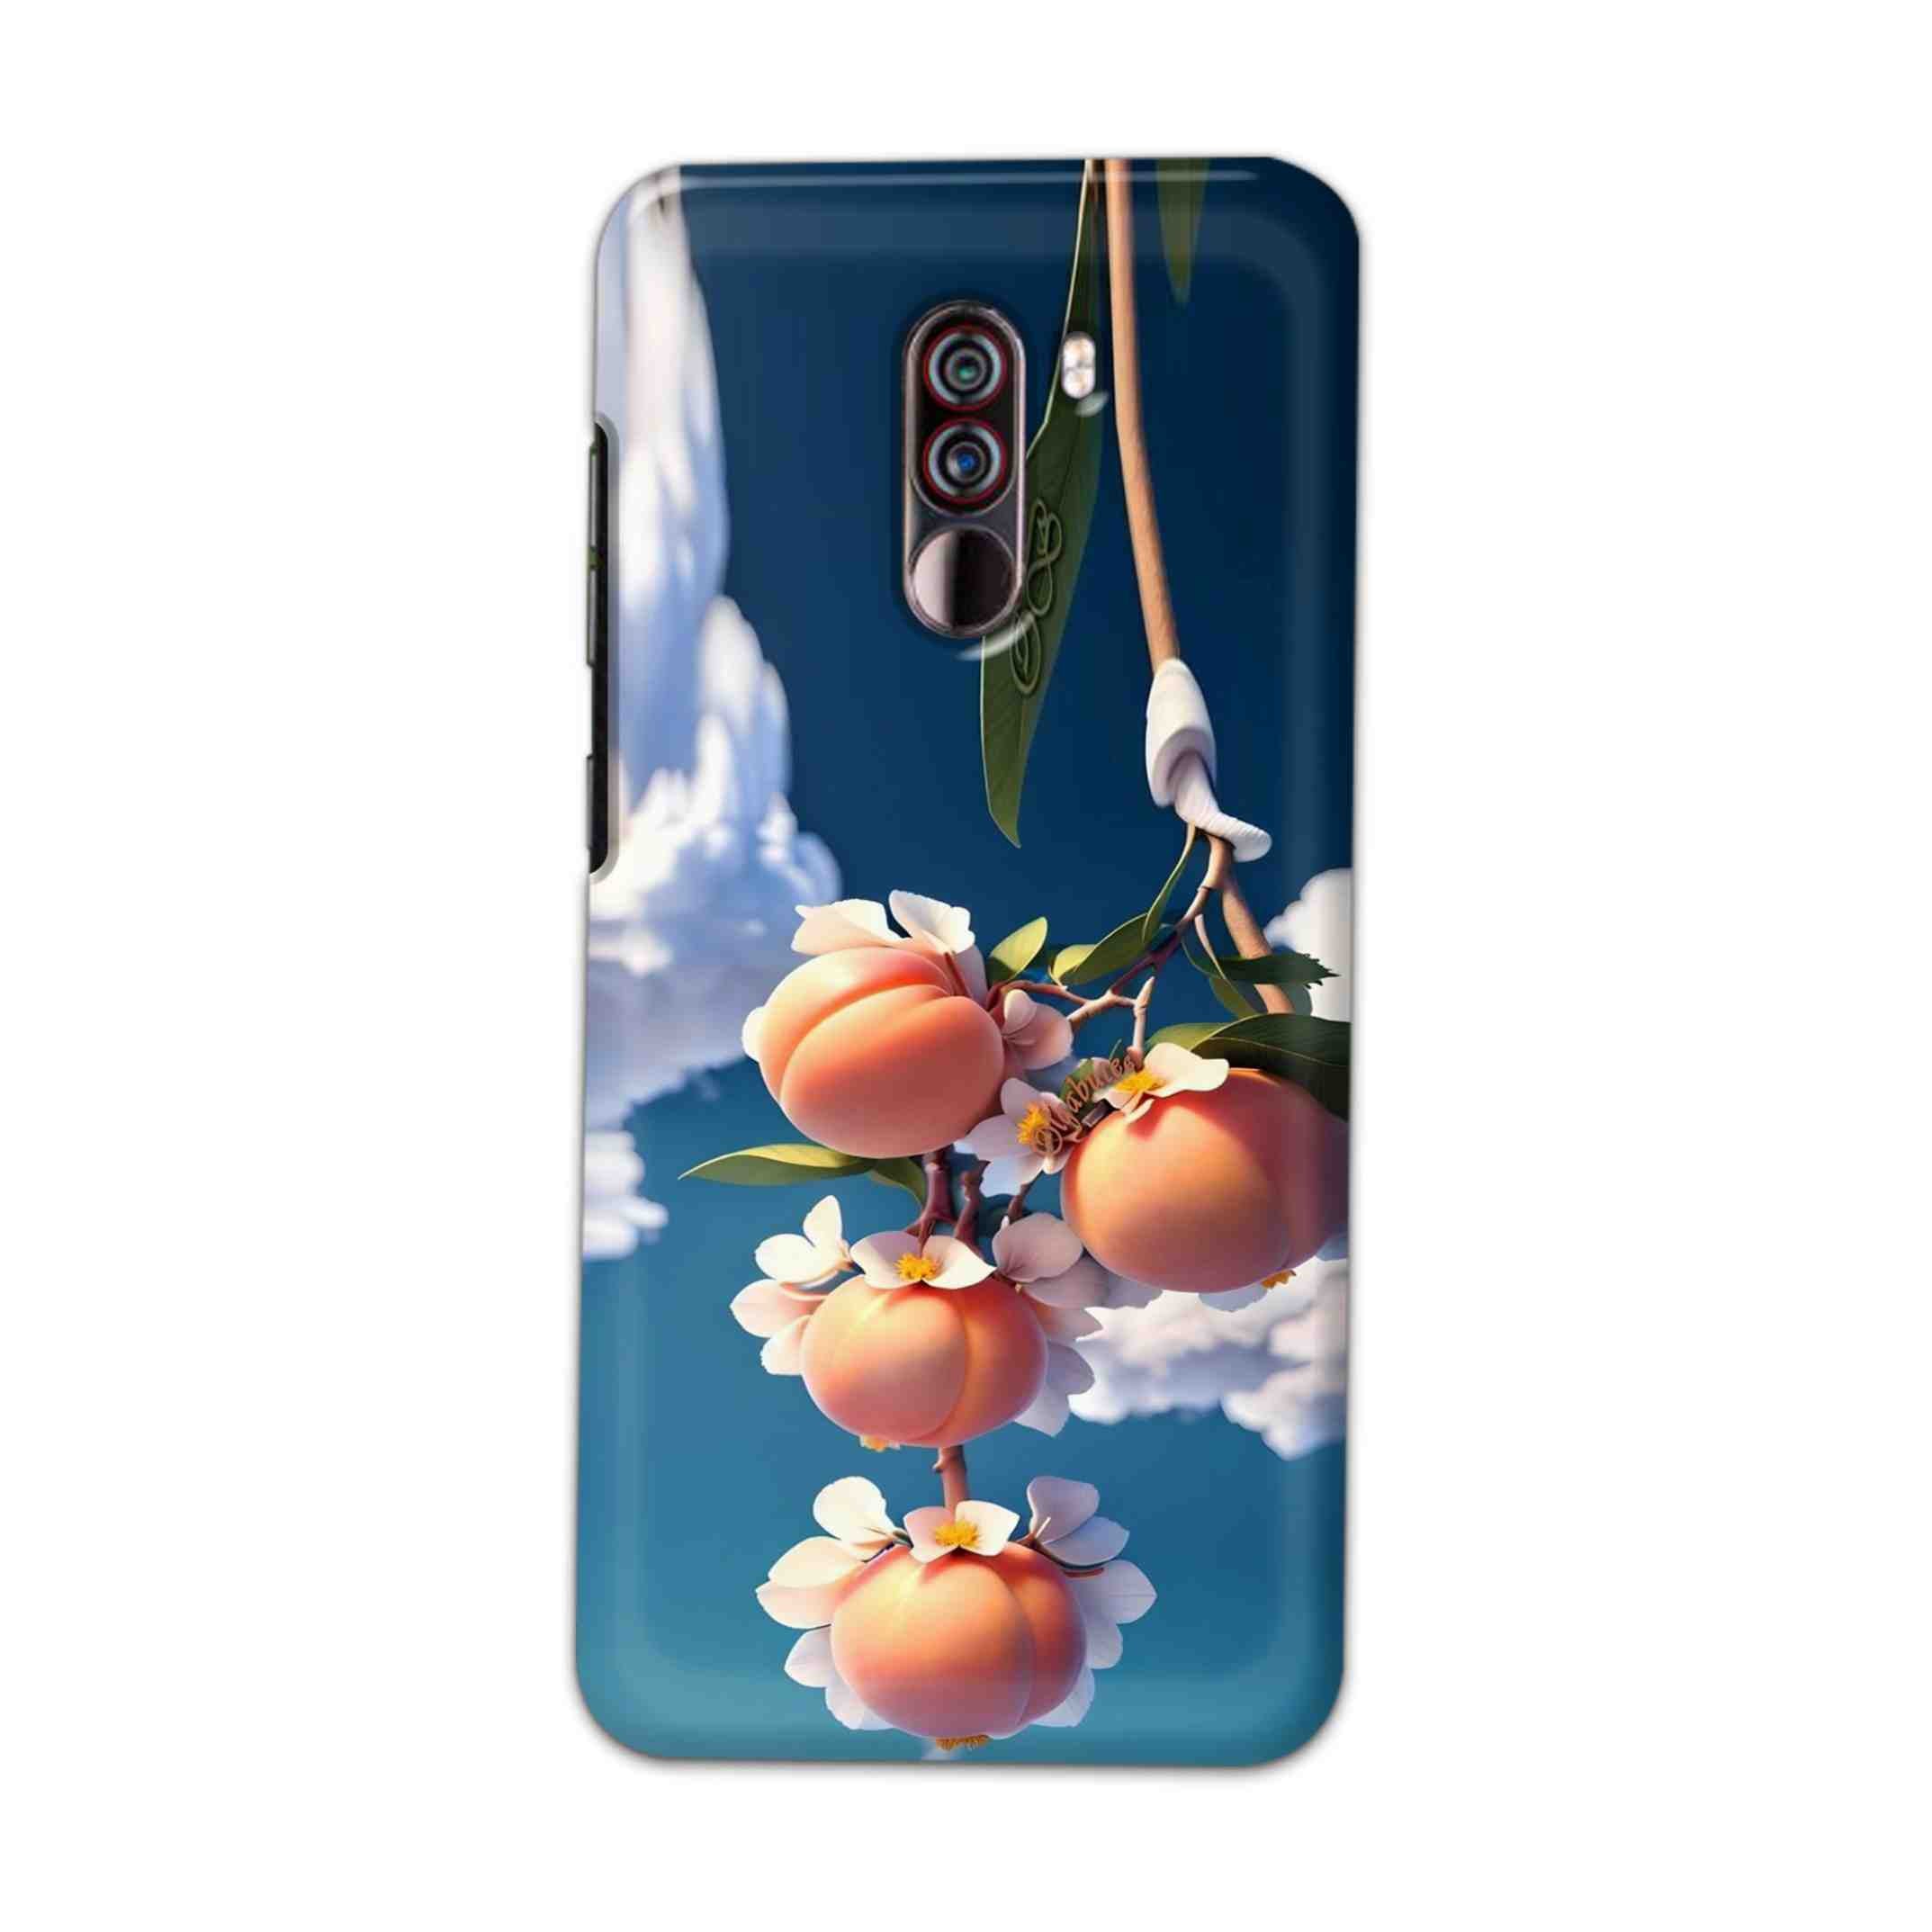 Buy Fruit Hard Back Mobile Phone Case Cover For Xiaomi Pocophone F1 Online